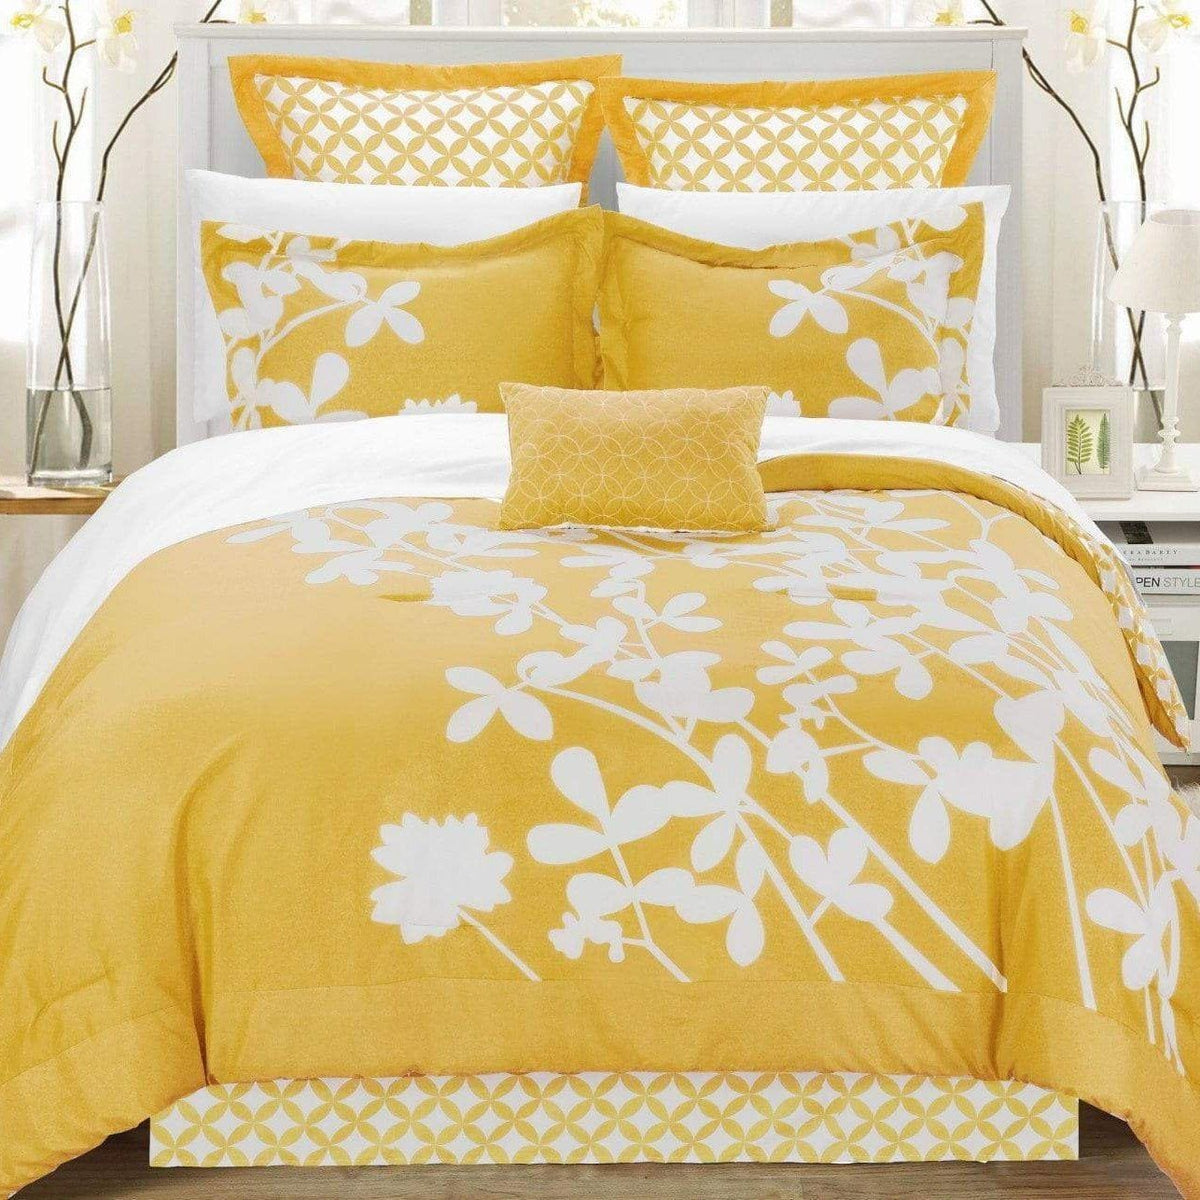 Chic Home Iris 11 Piece Floral Comforter Set Yellow